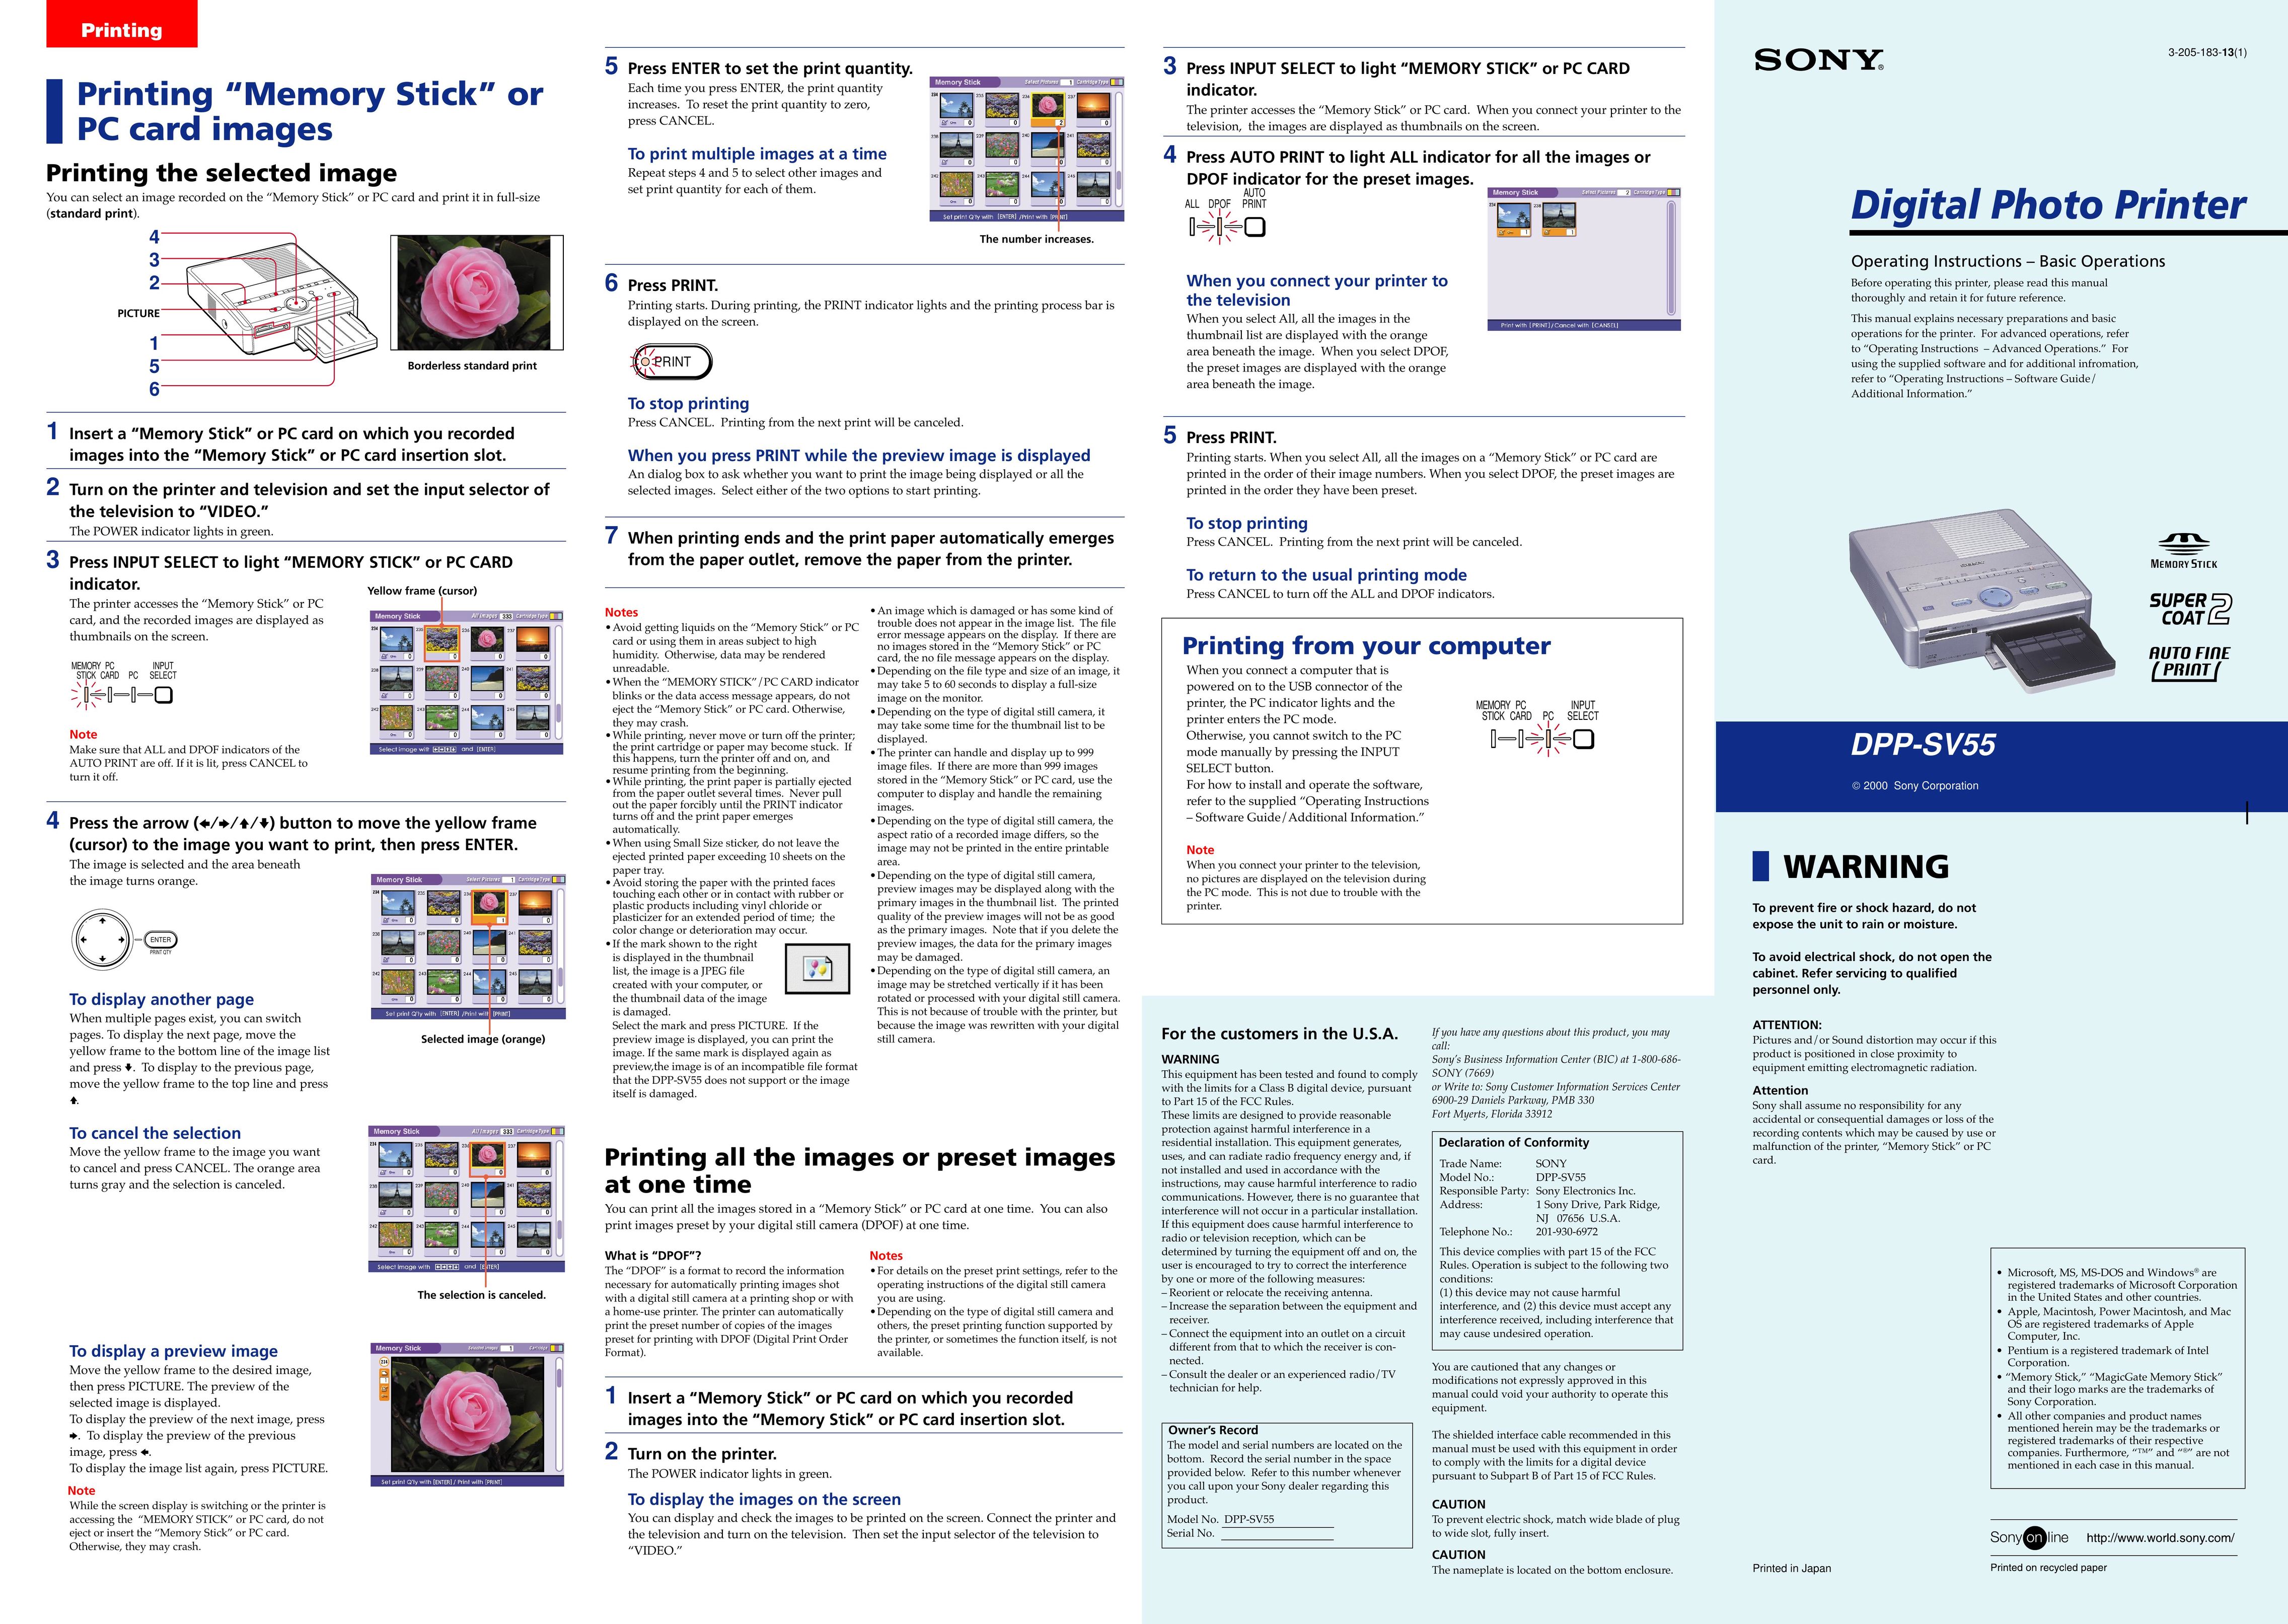 Sony DPPSV55 All in One Printer User Manual